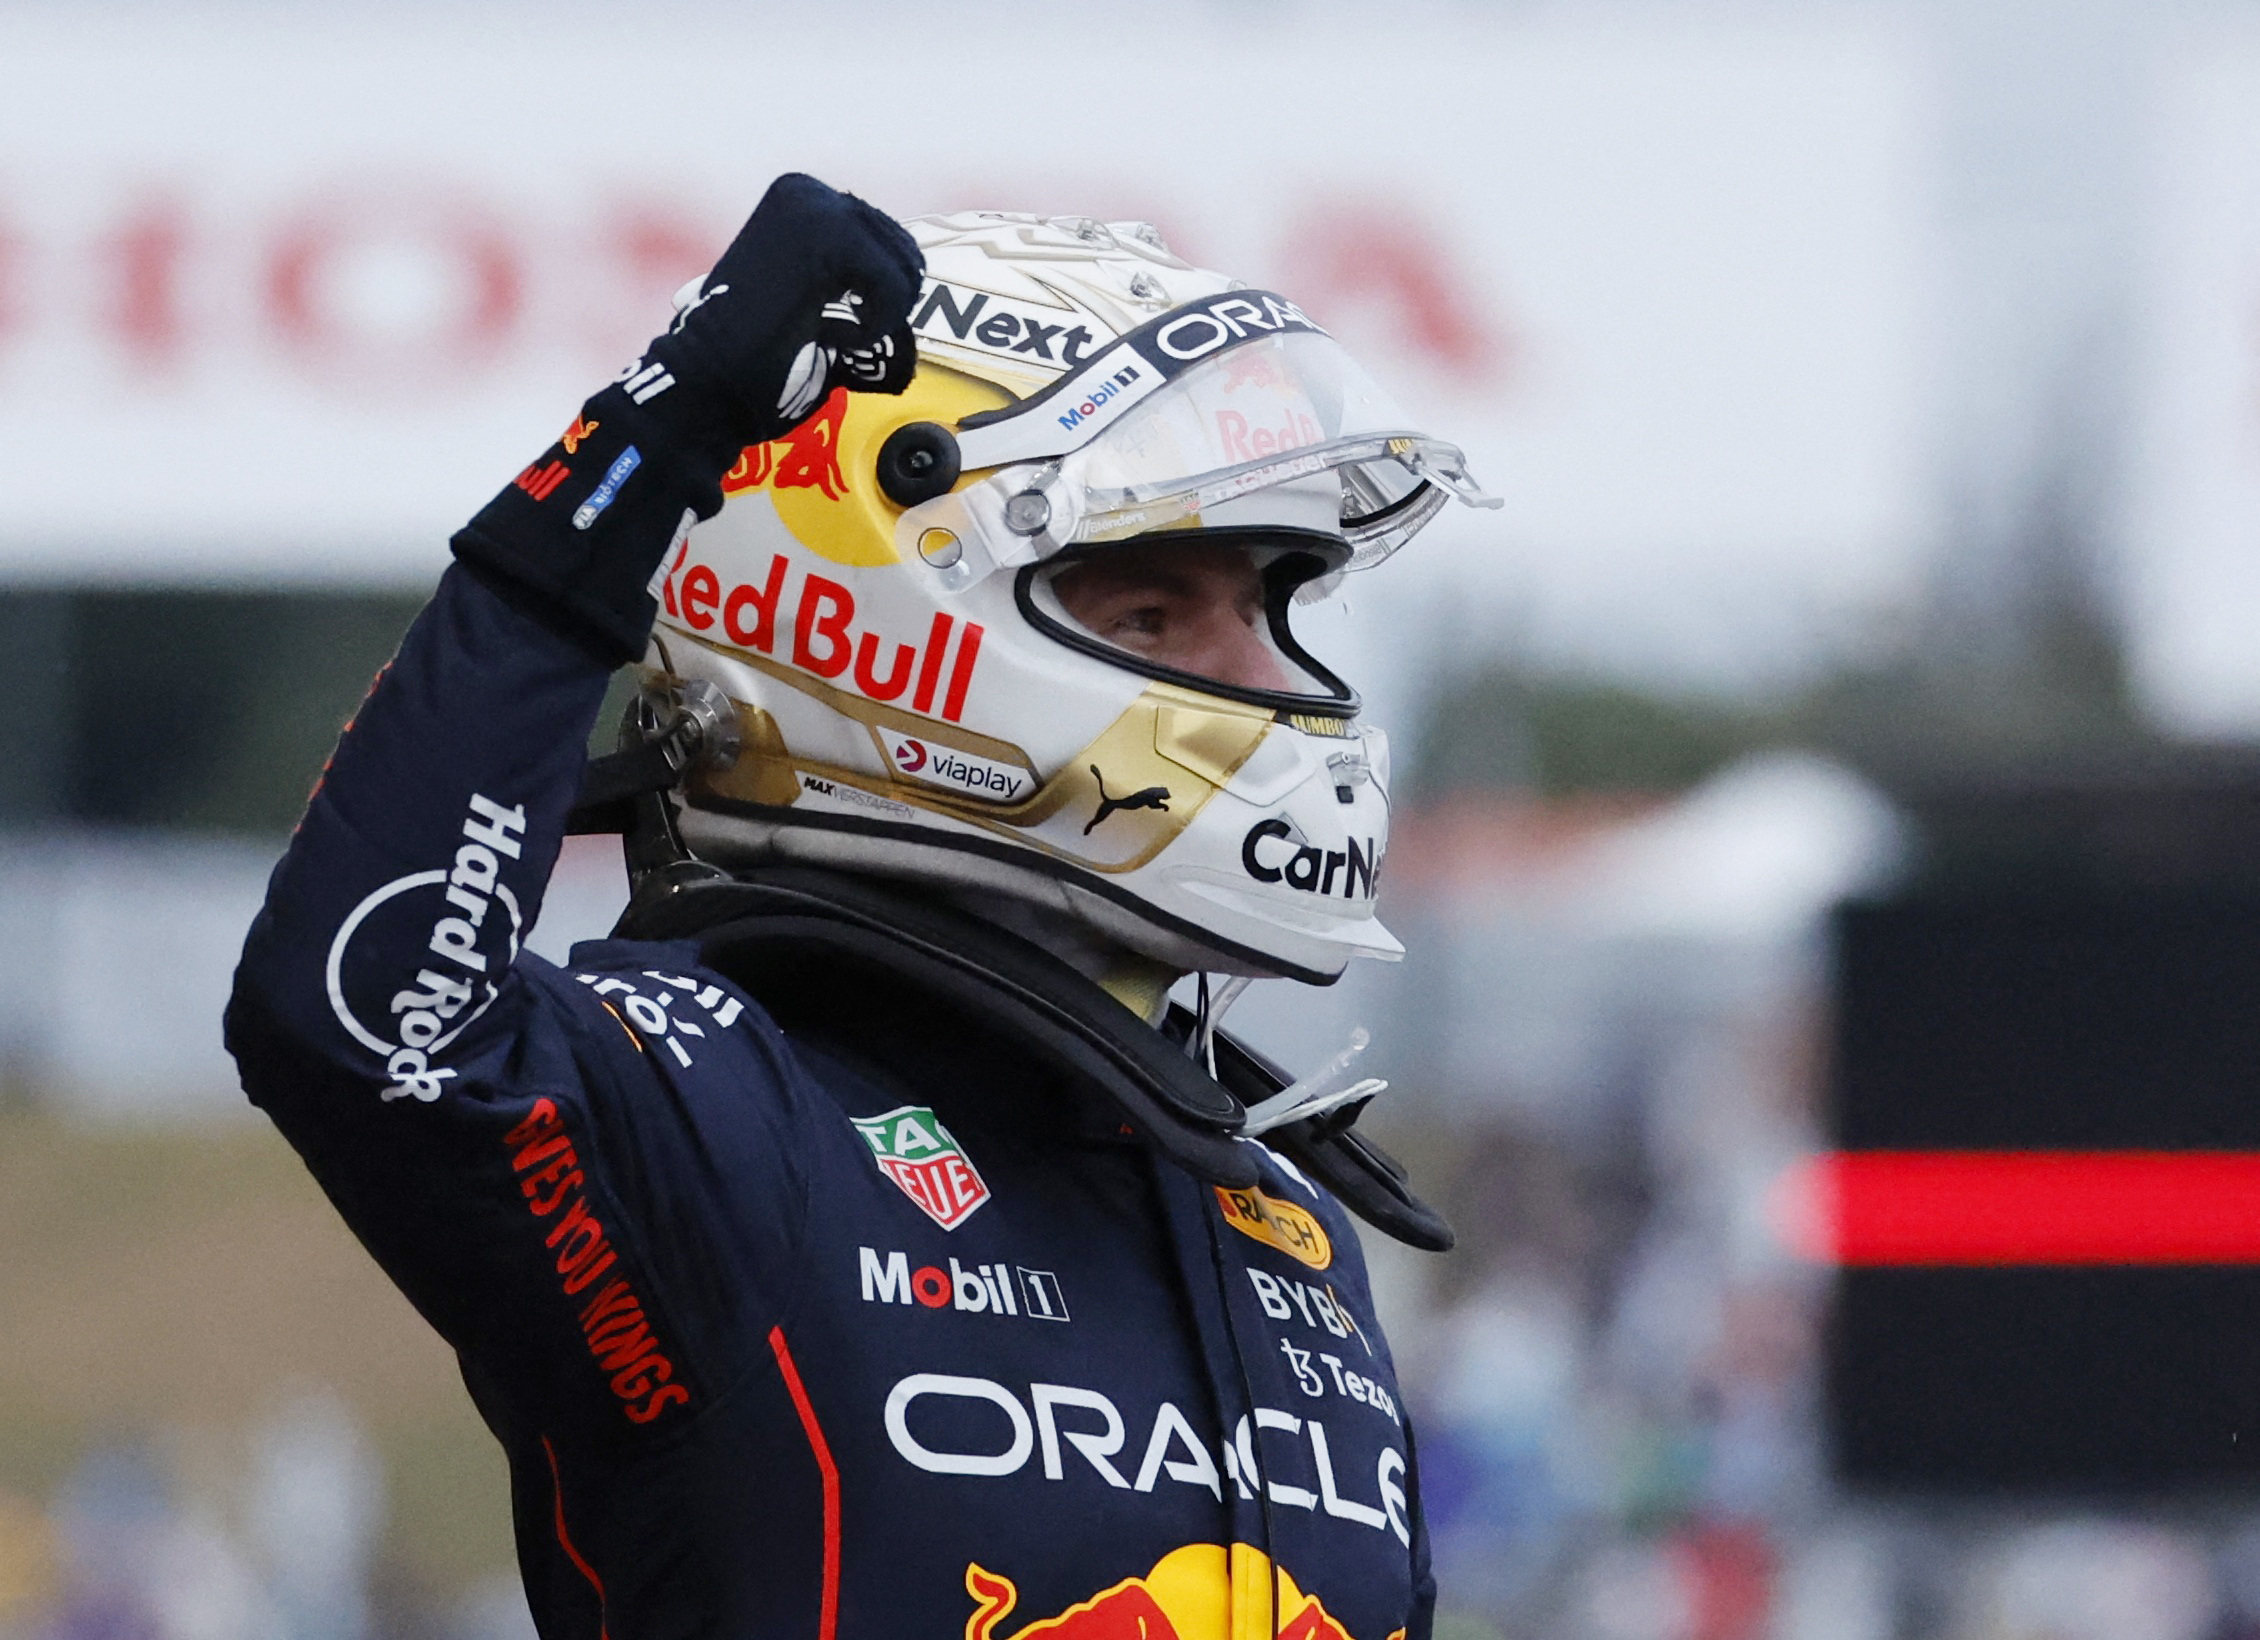 Red Bull’s Max Verstappen celebrates winning the race. Photo: Reuters